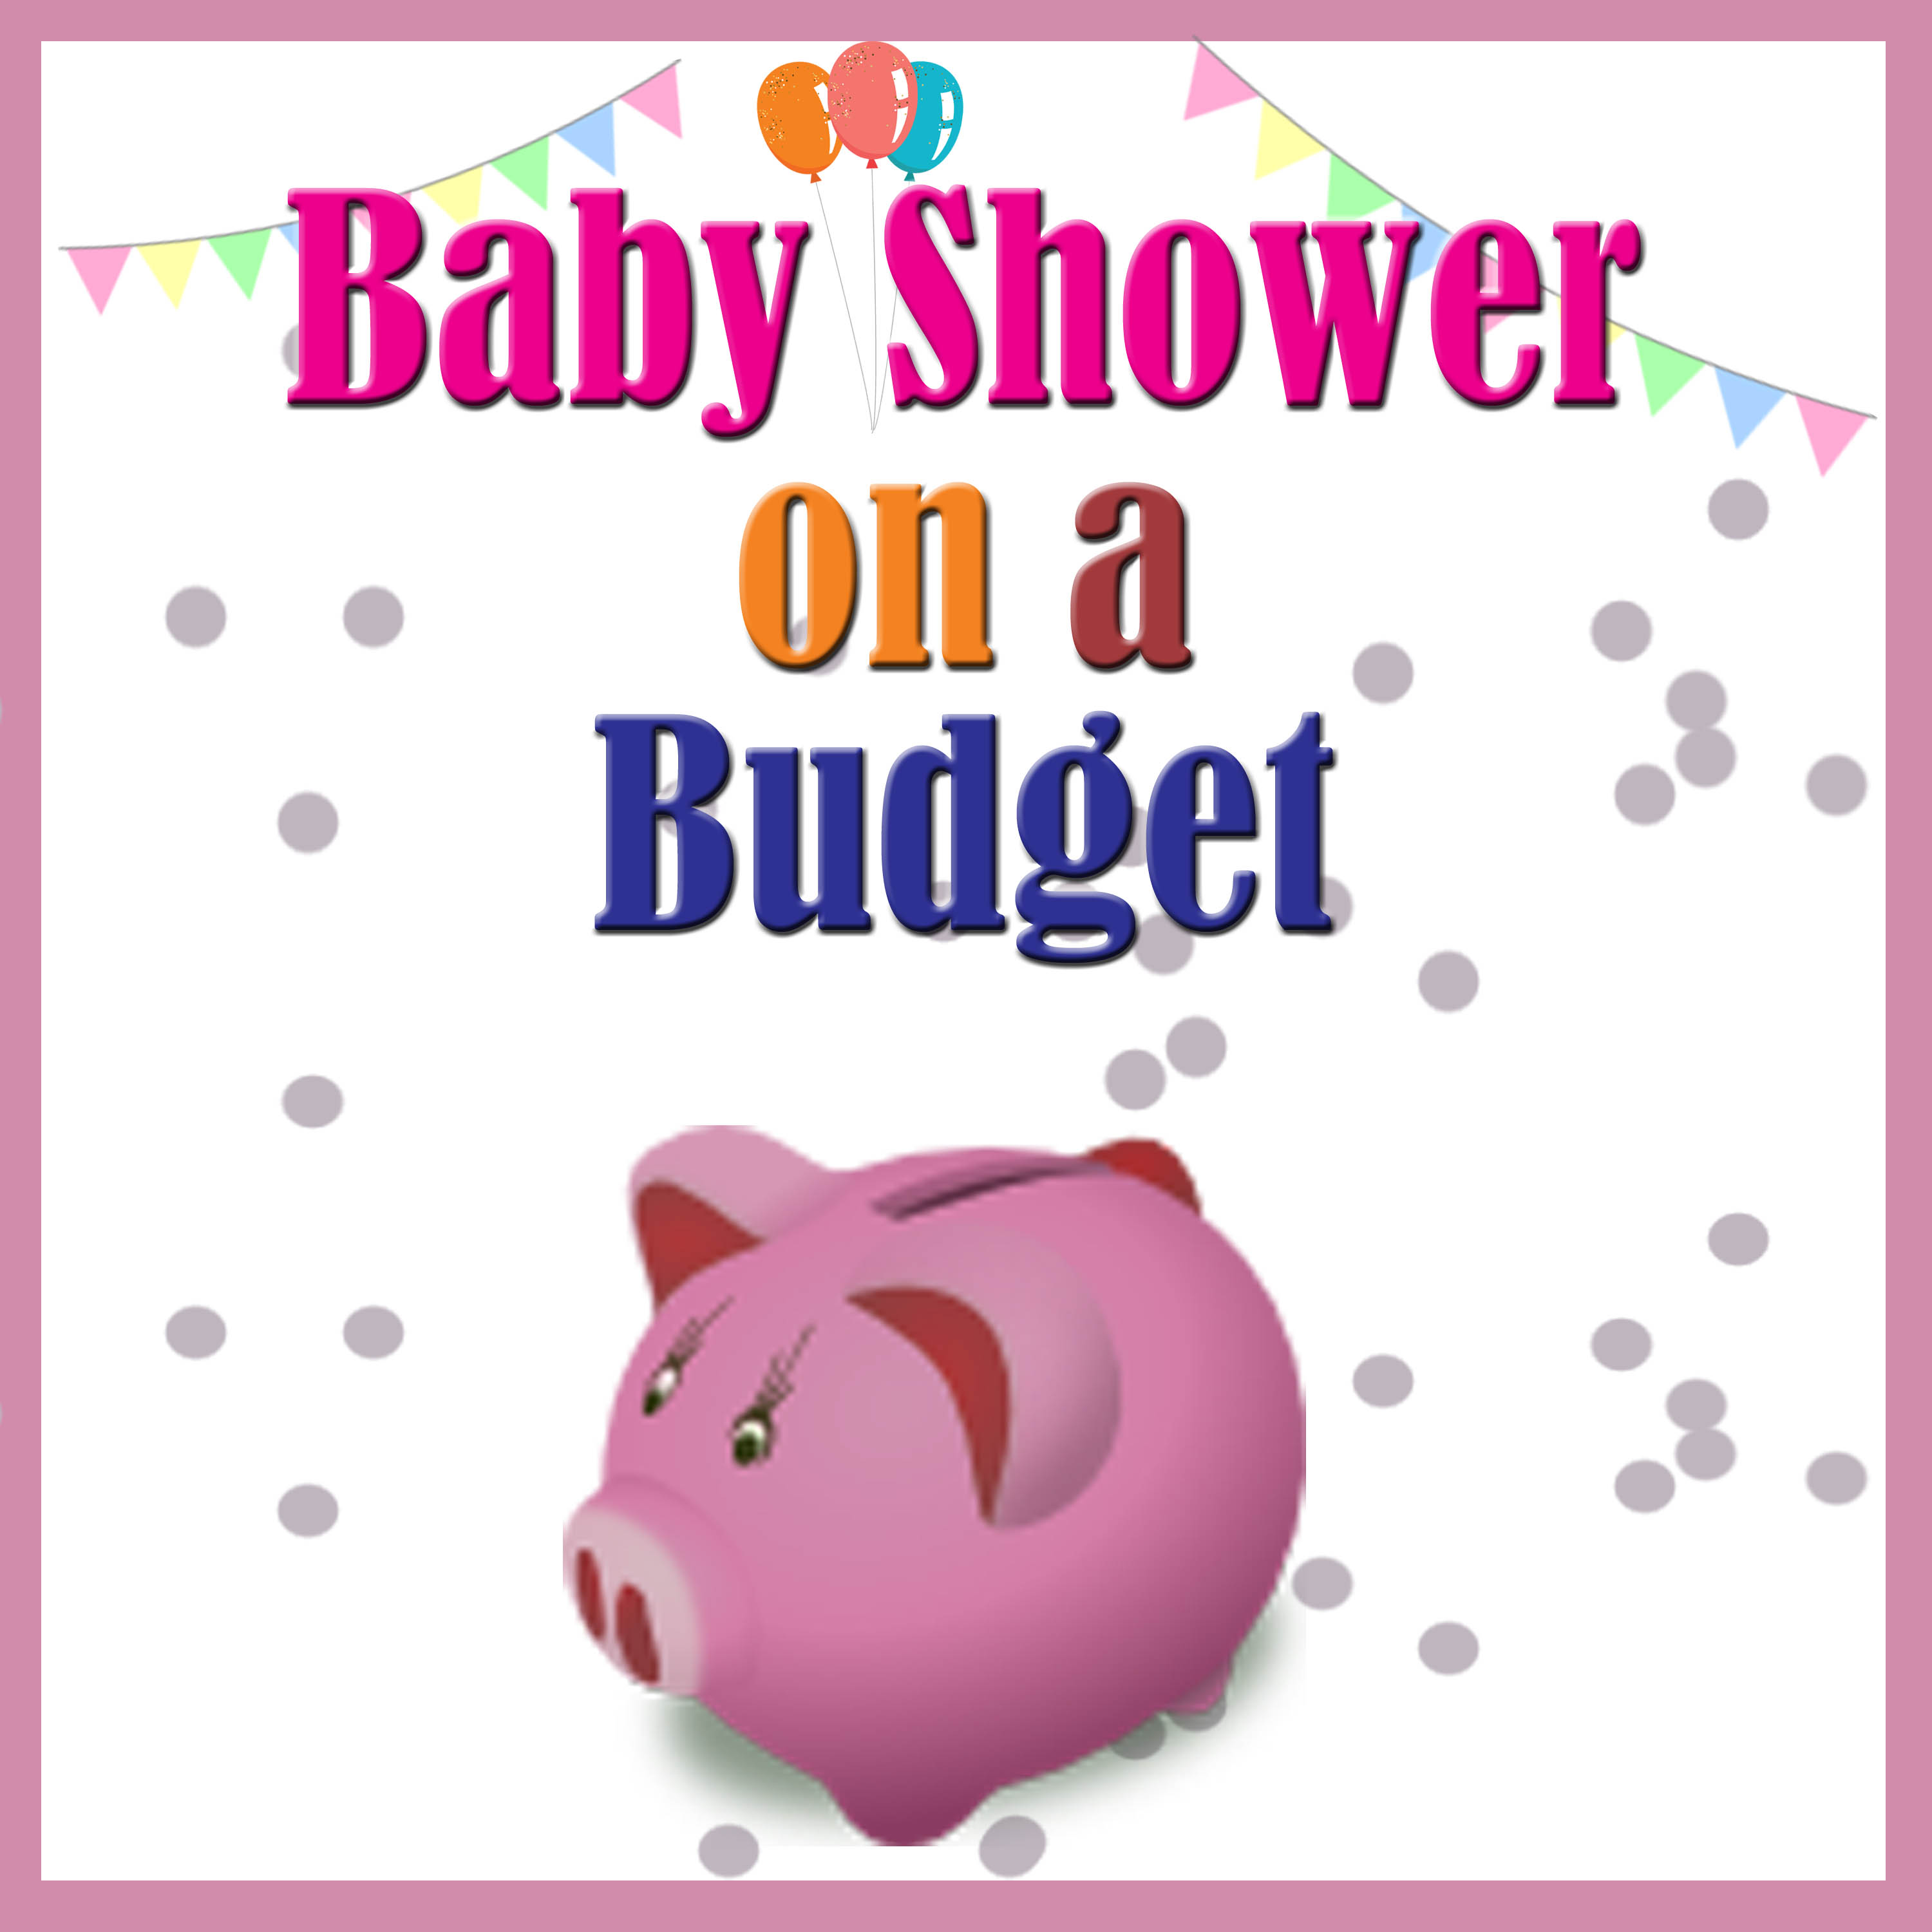 baby shower budget